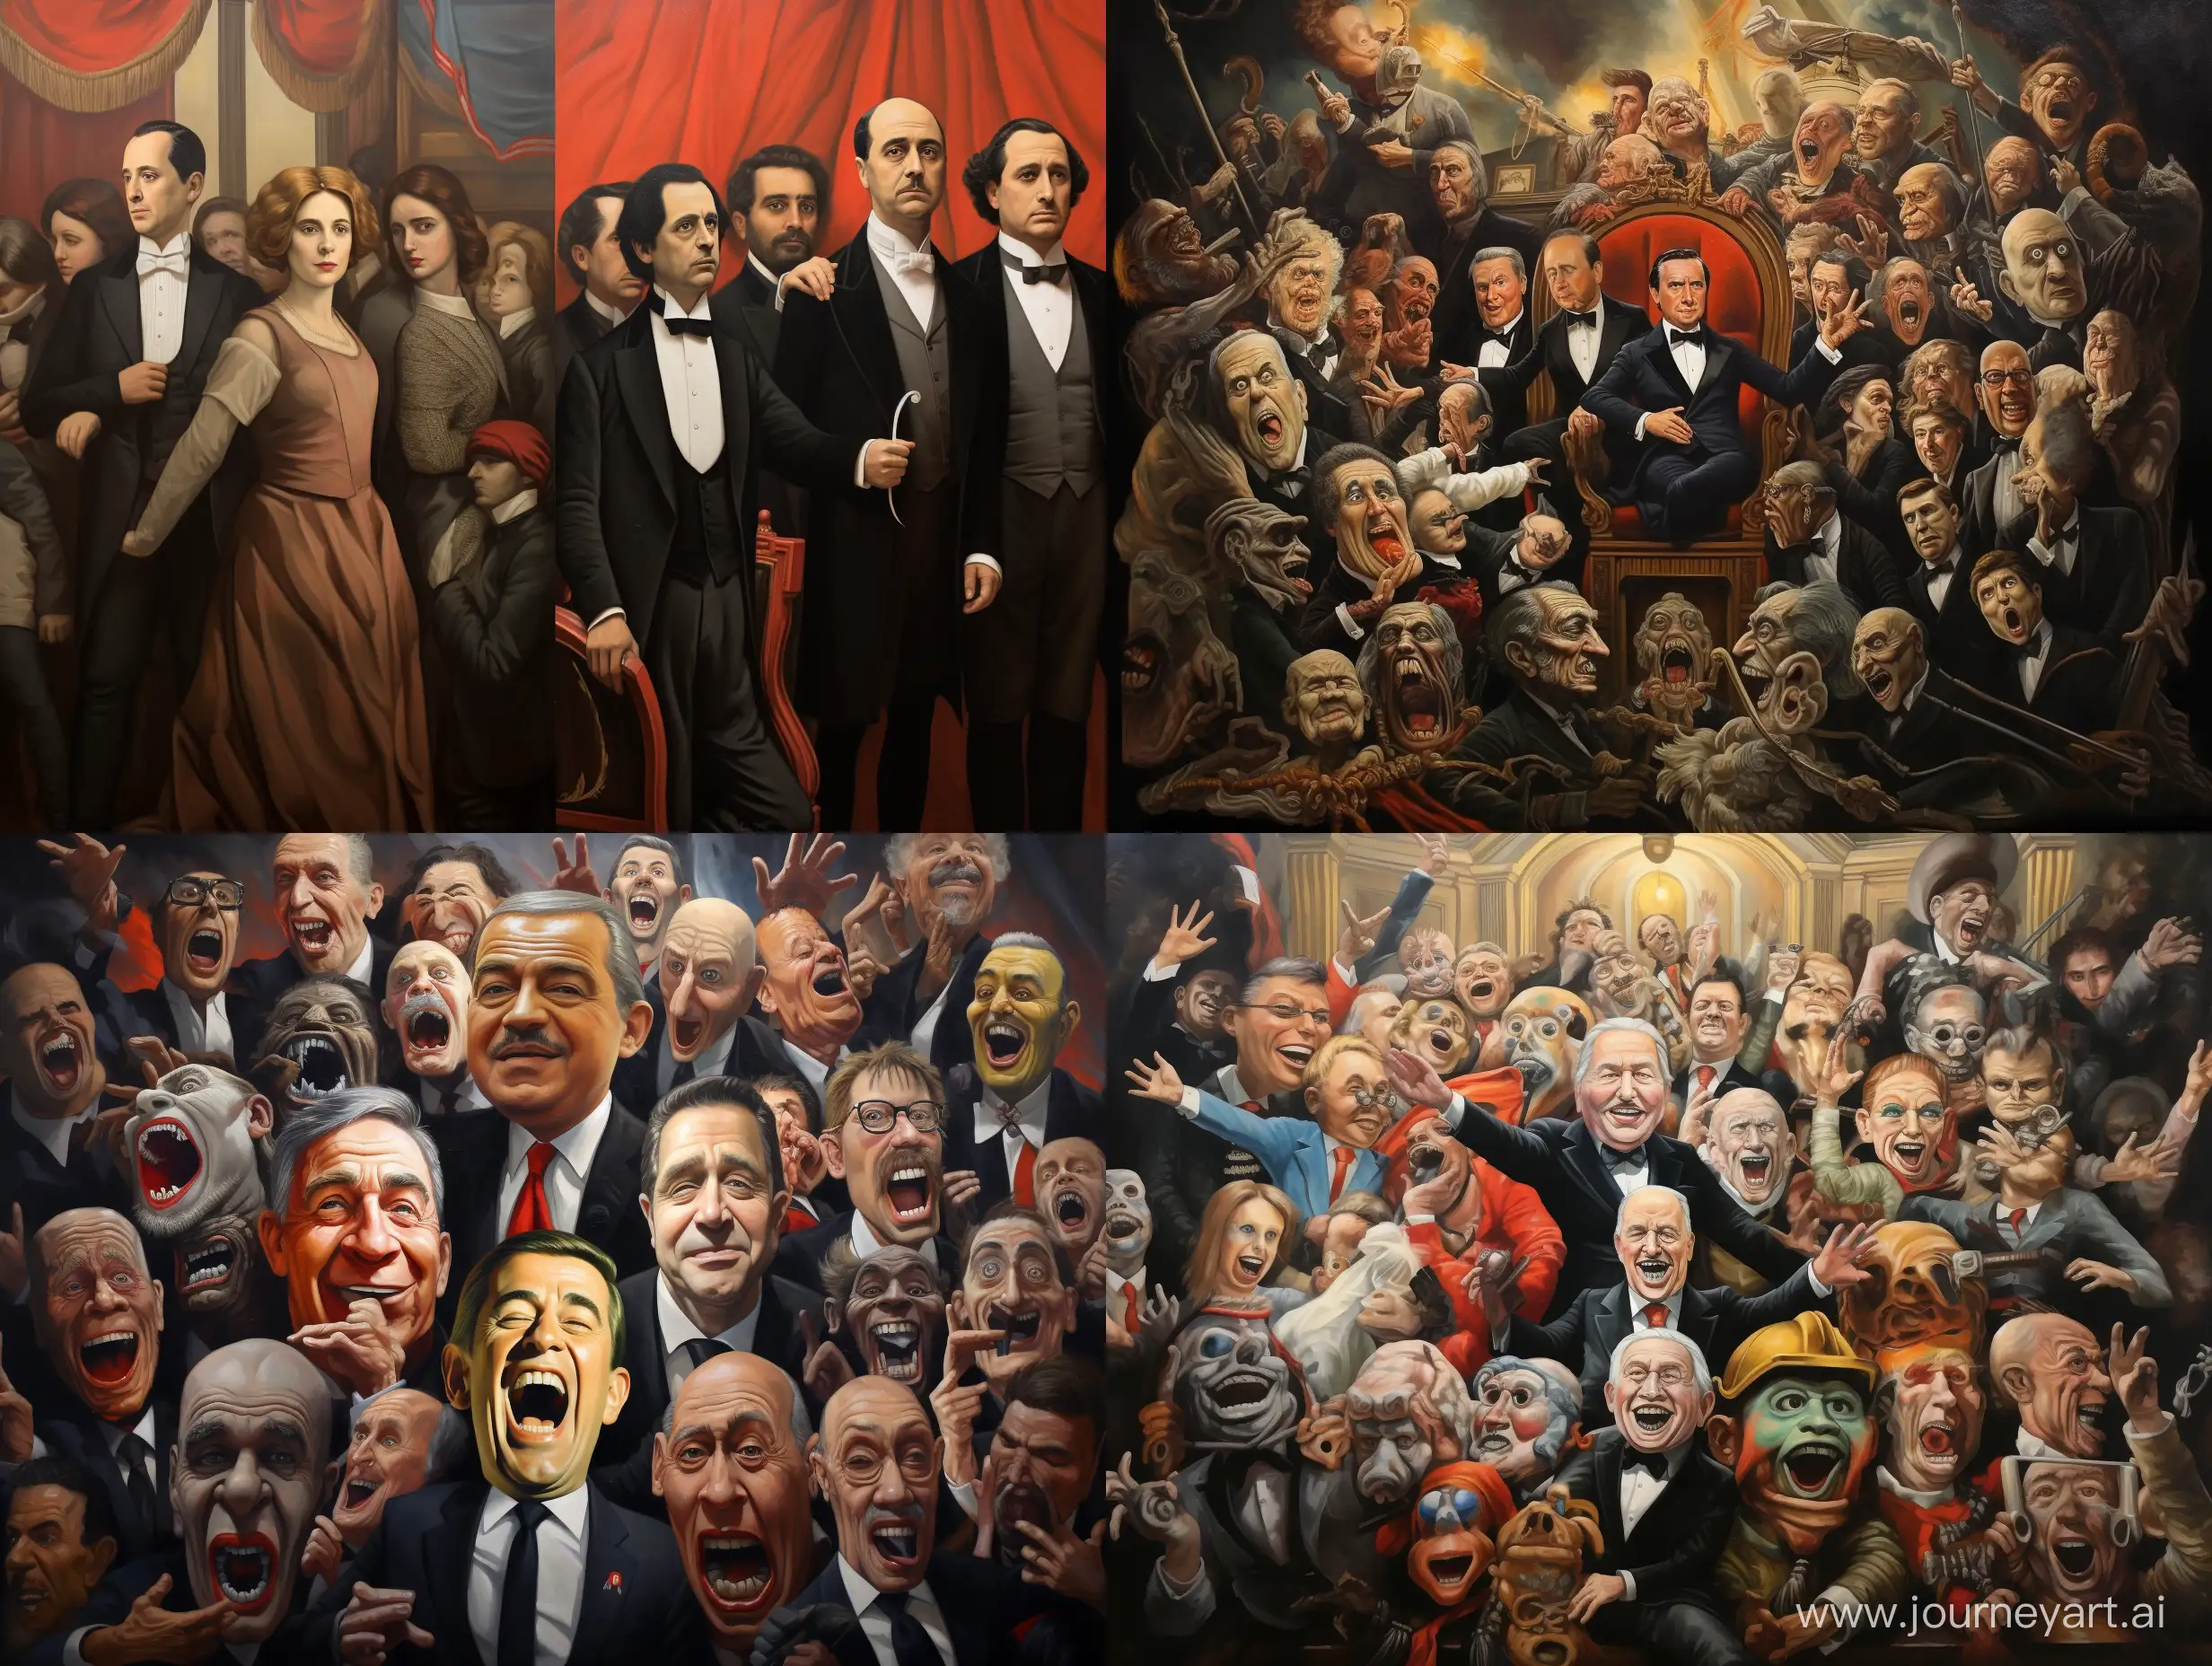 Political-Leaders-Recreate-La-Scne-Painting-in-Artistic-Homage